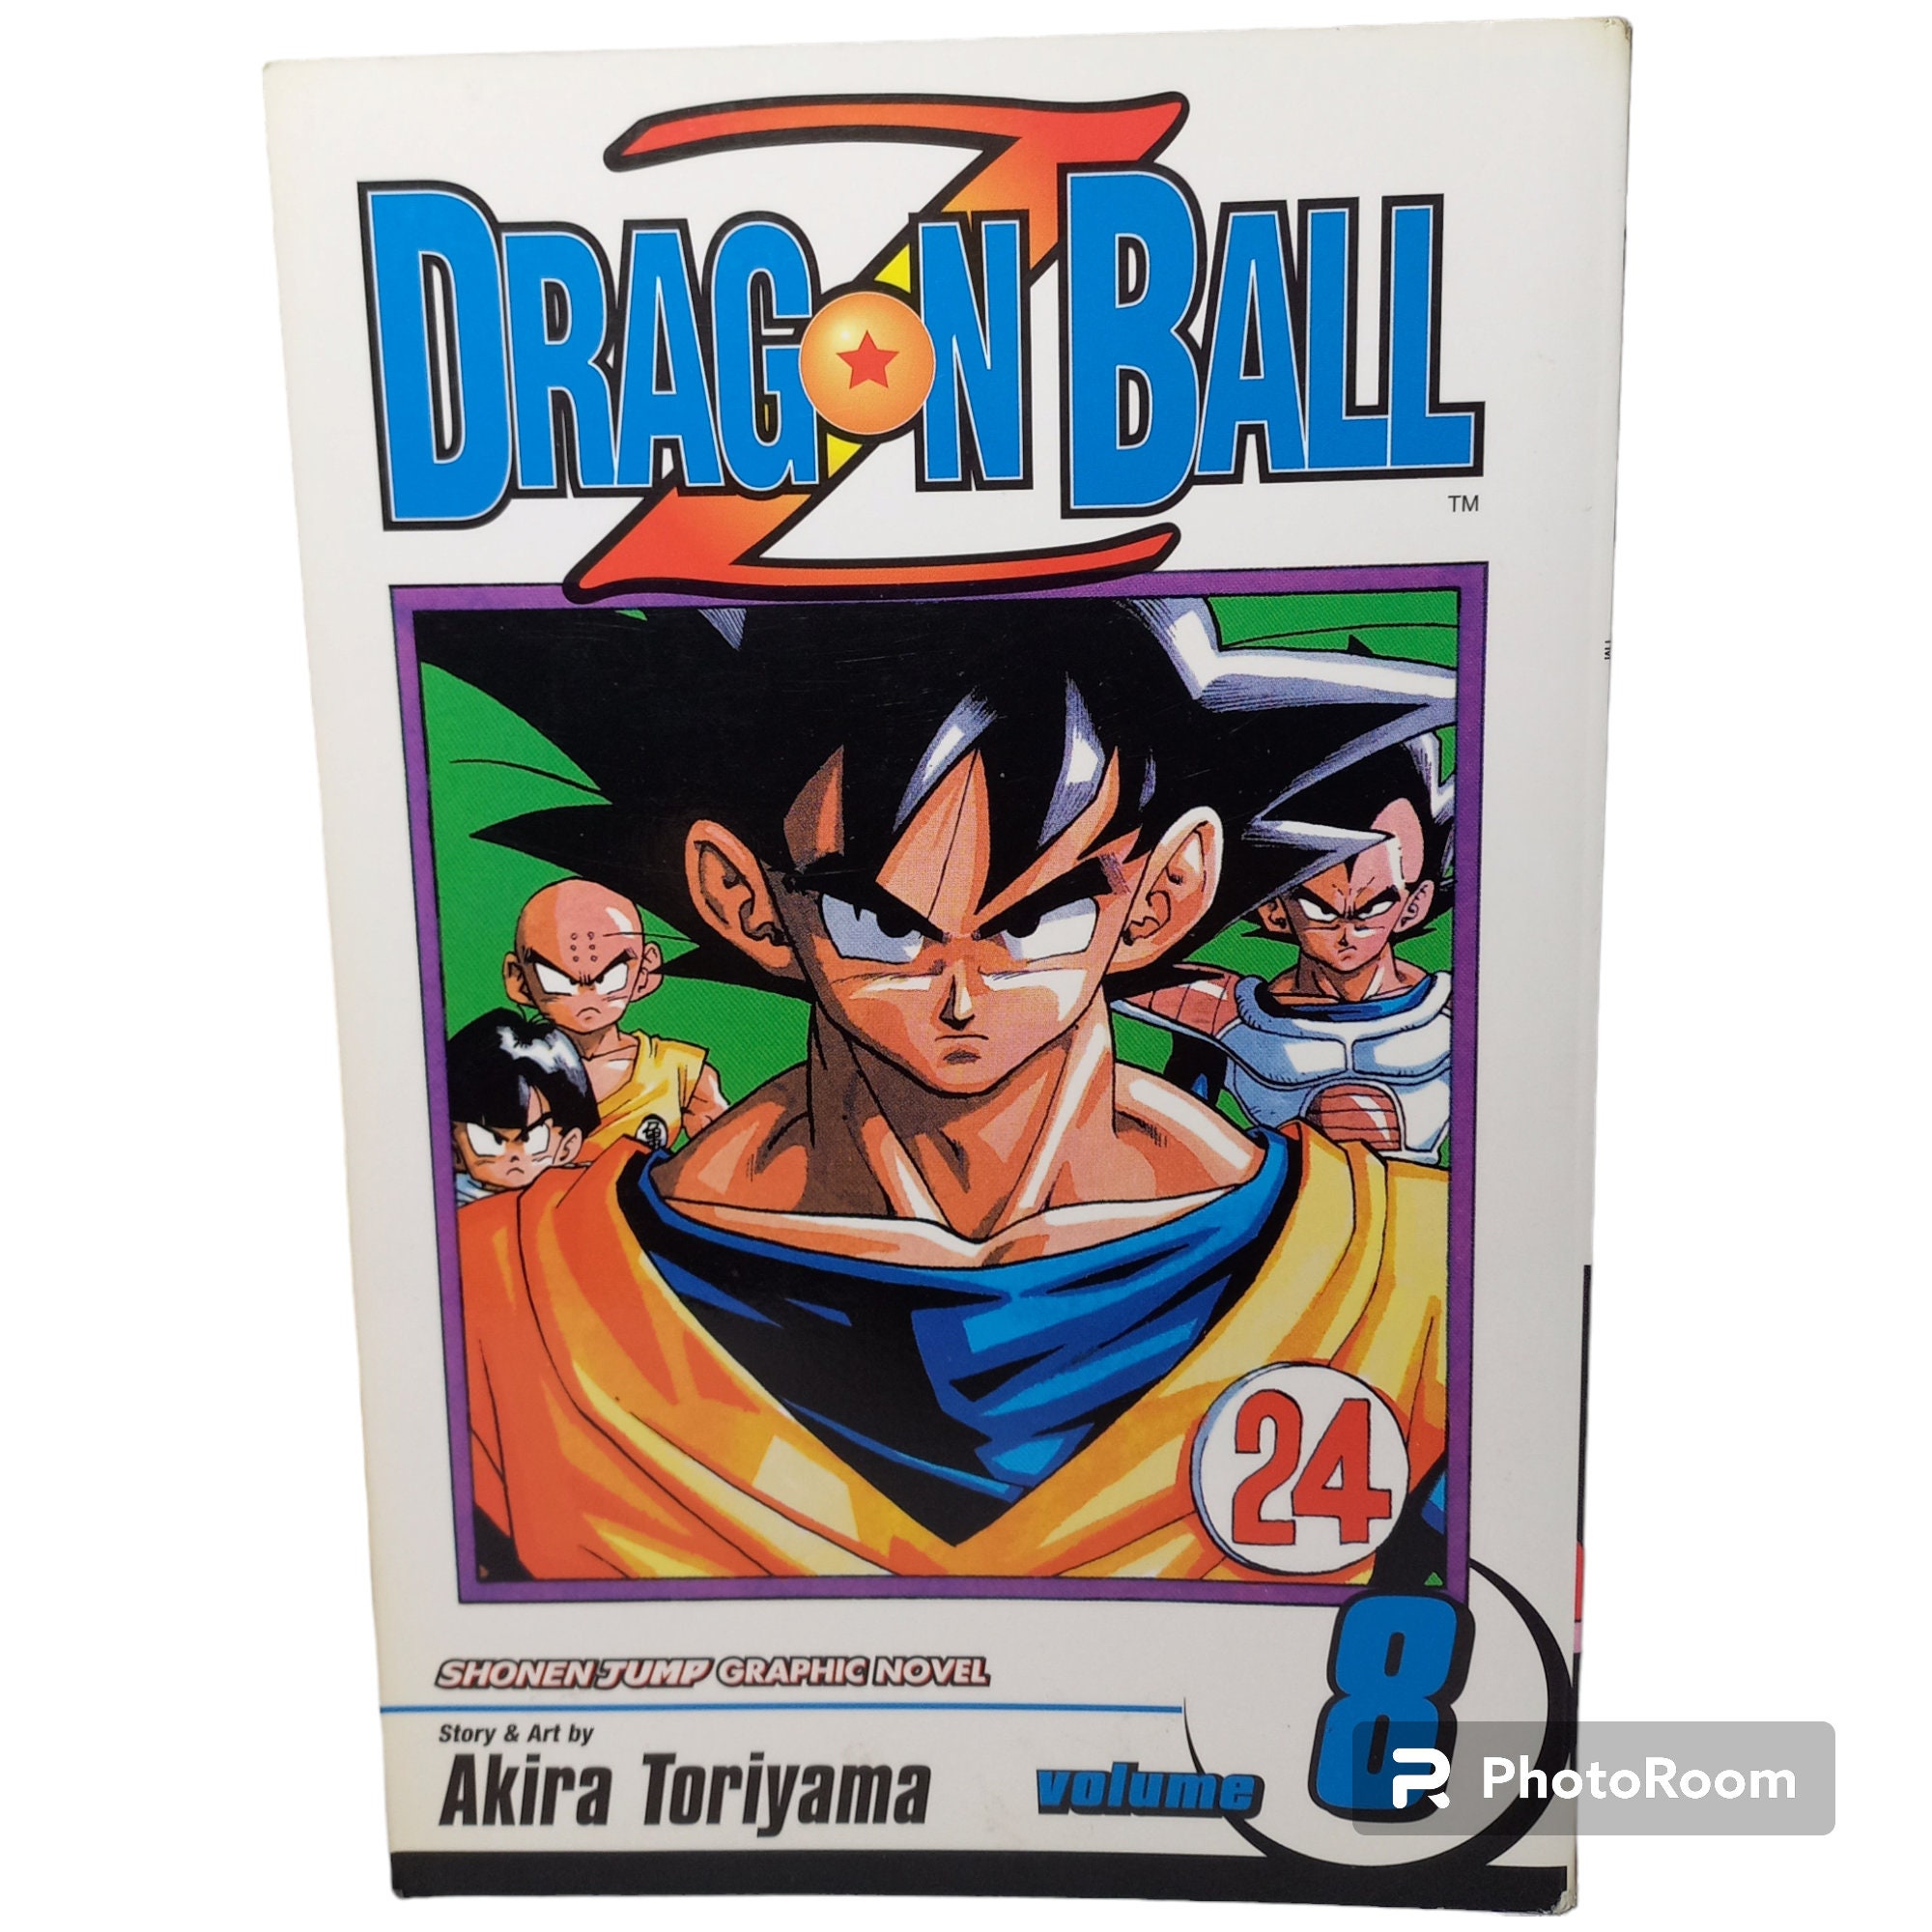 Beyond Dragon Ball: 15 of Akira Toriyama's Best Manga, Anime and